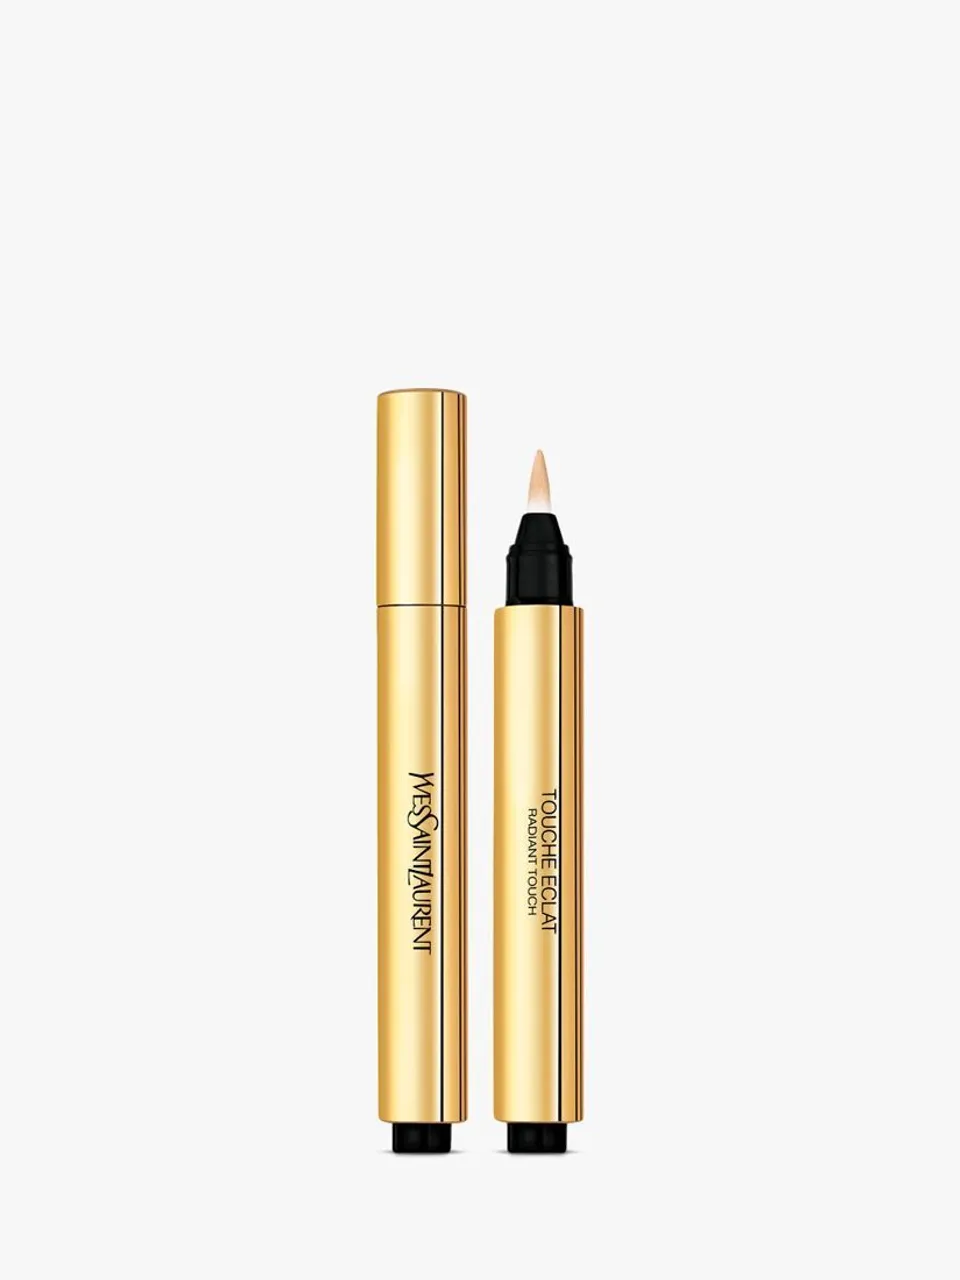 Yves Saint Laurent Touche Ã‰clat Illuminating Pen - 4.5 Luminous Sand - Unisex - Size: 2.5ml